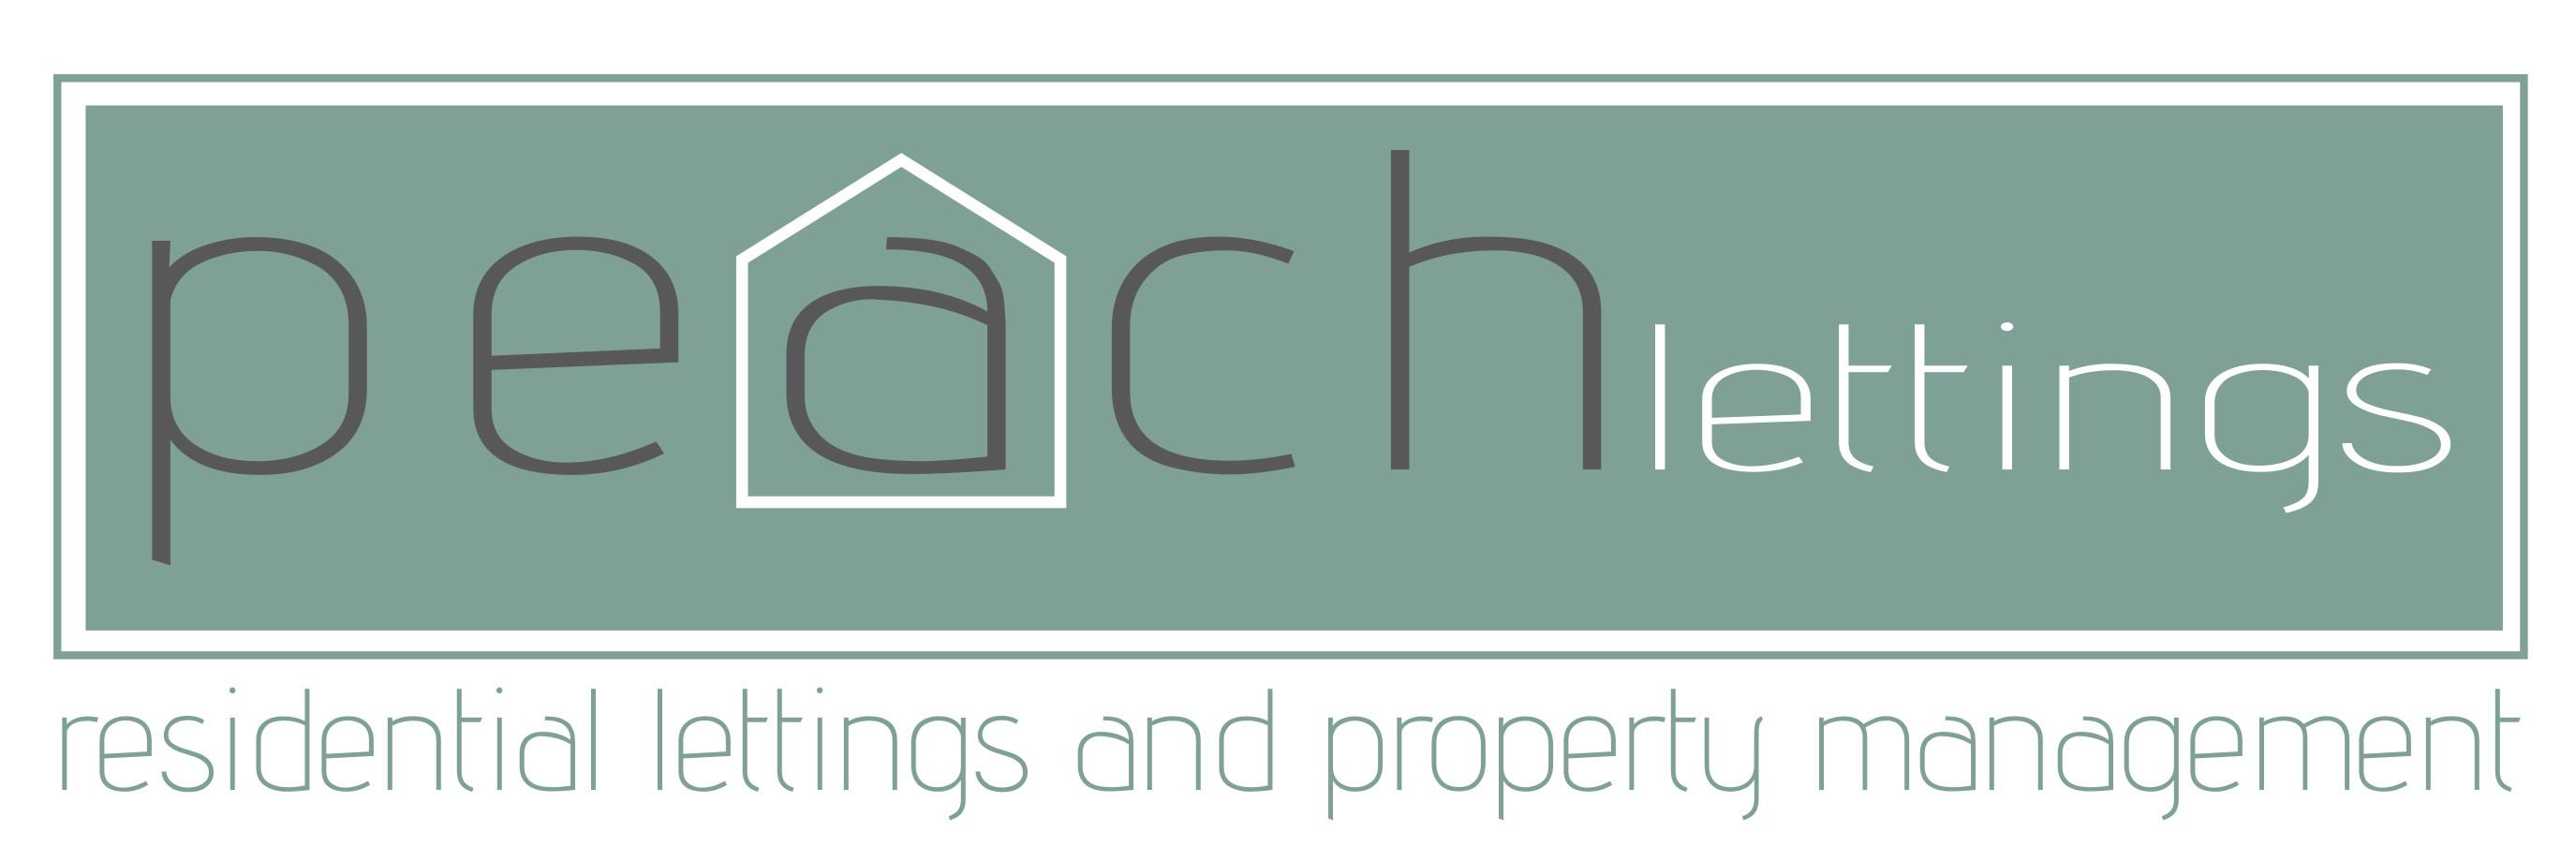 Logo of Peach Lettings